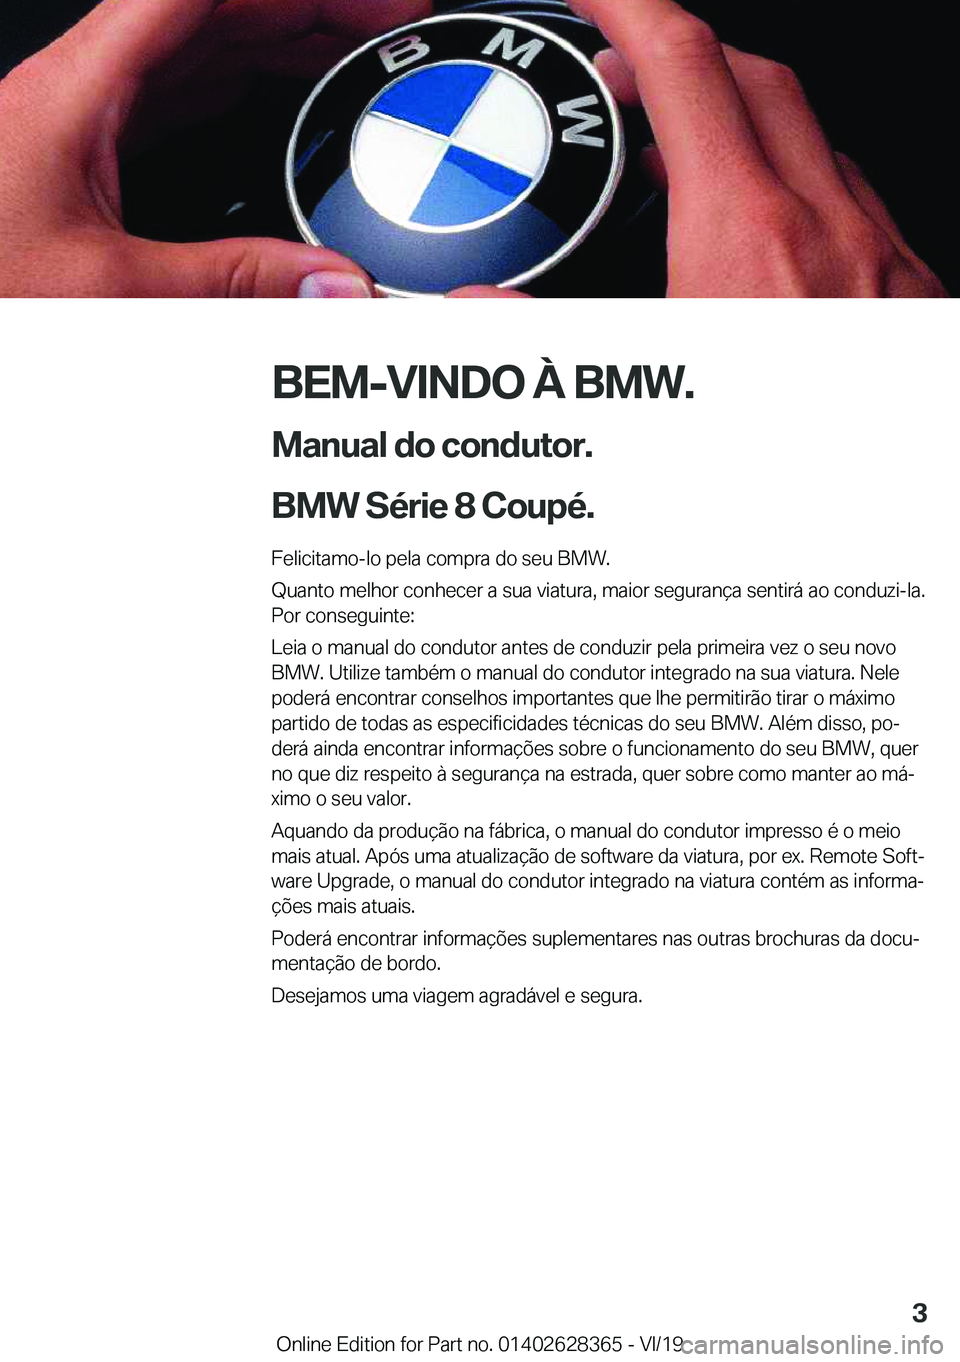 BMW 8 SERIES COUPE 2020  Manual do condutor (in Portuguese) �B�E�M�-�V�I�N�D�O��À��B�M�W�.
�M�a�n�u�a�l��d�o��c�o�n�d�u�t�o�r�.
�B�M�W��S�é�r�i�e��8��C�o�u�p�é�. �F�e�l�i�c�i�t�a�m�o�-�l�o��p�e�l�a��c�o�m�p�r�a��d�o��s�e�u��B�M�W�.�Q�u�a�n�t�o�